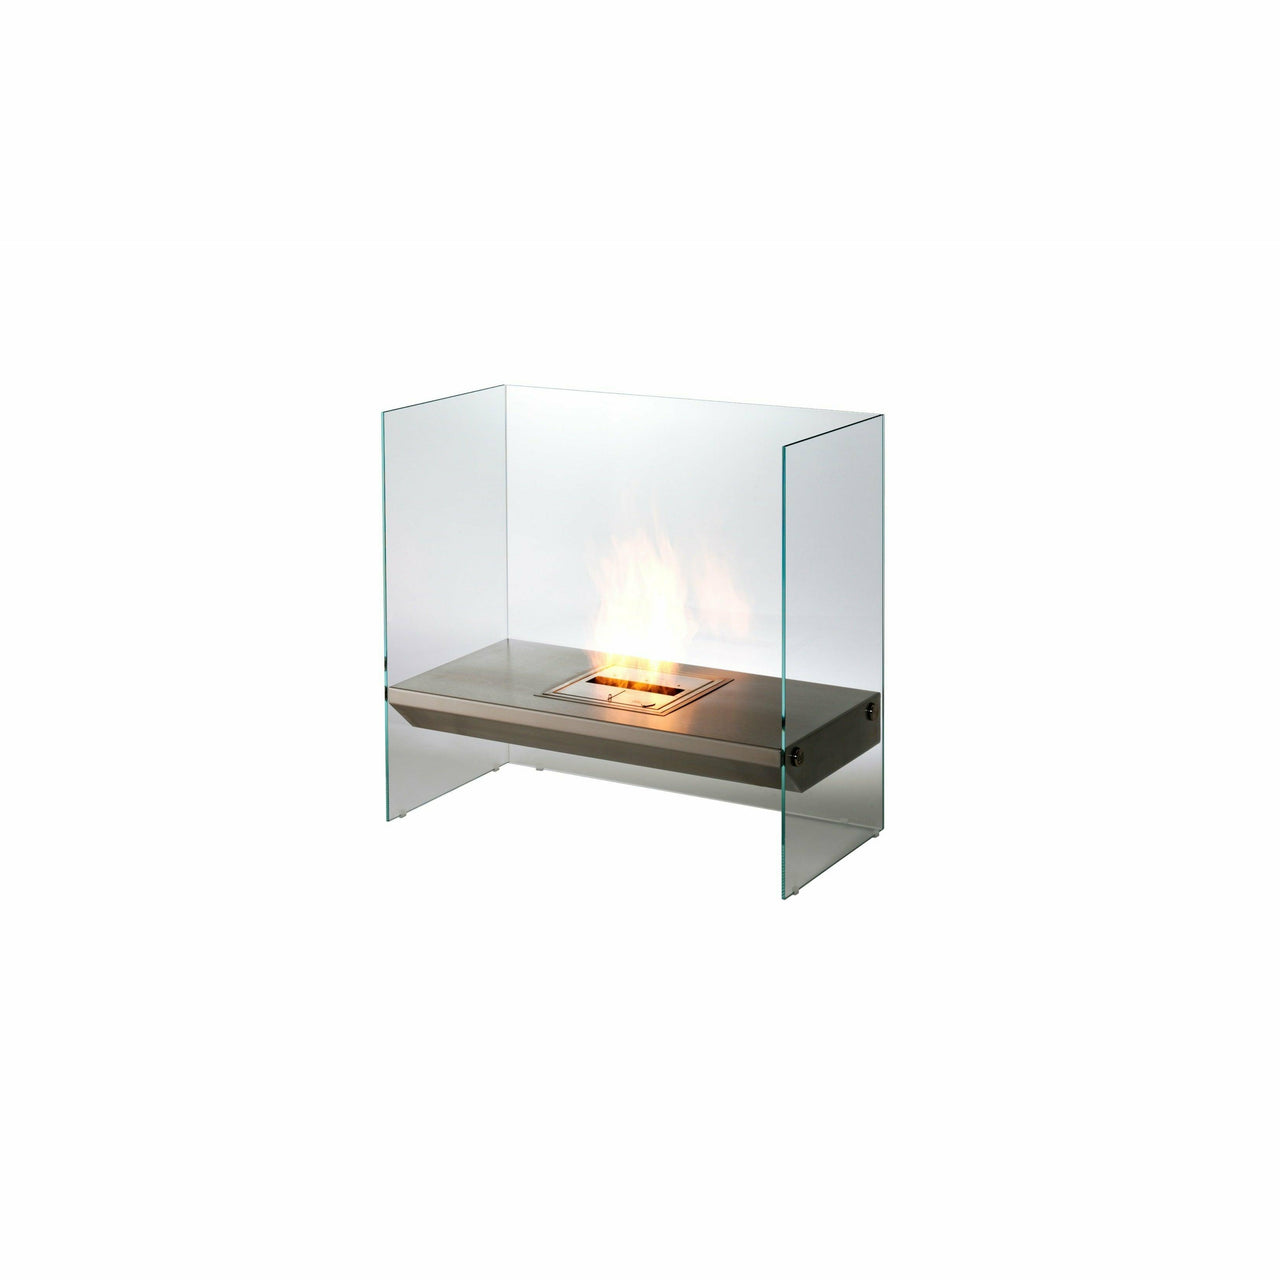 EcoSmart Fire - Igloo Designer Fireplace - ESF.D.IGL - Fire Pit Stock